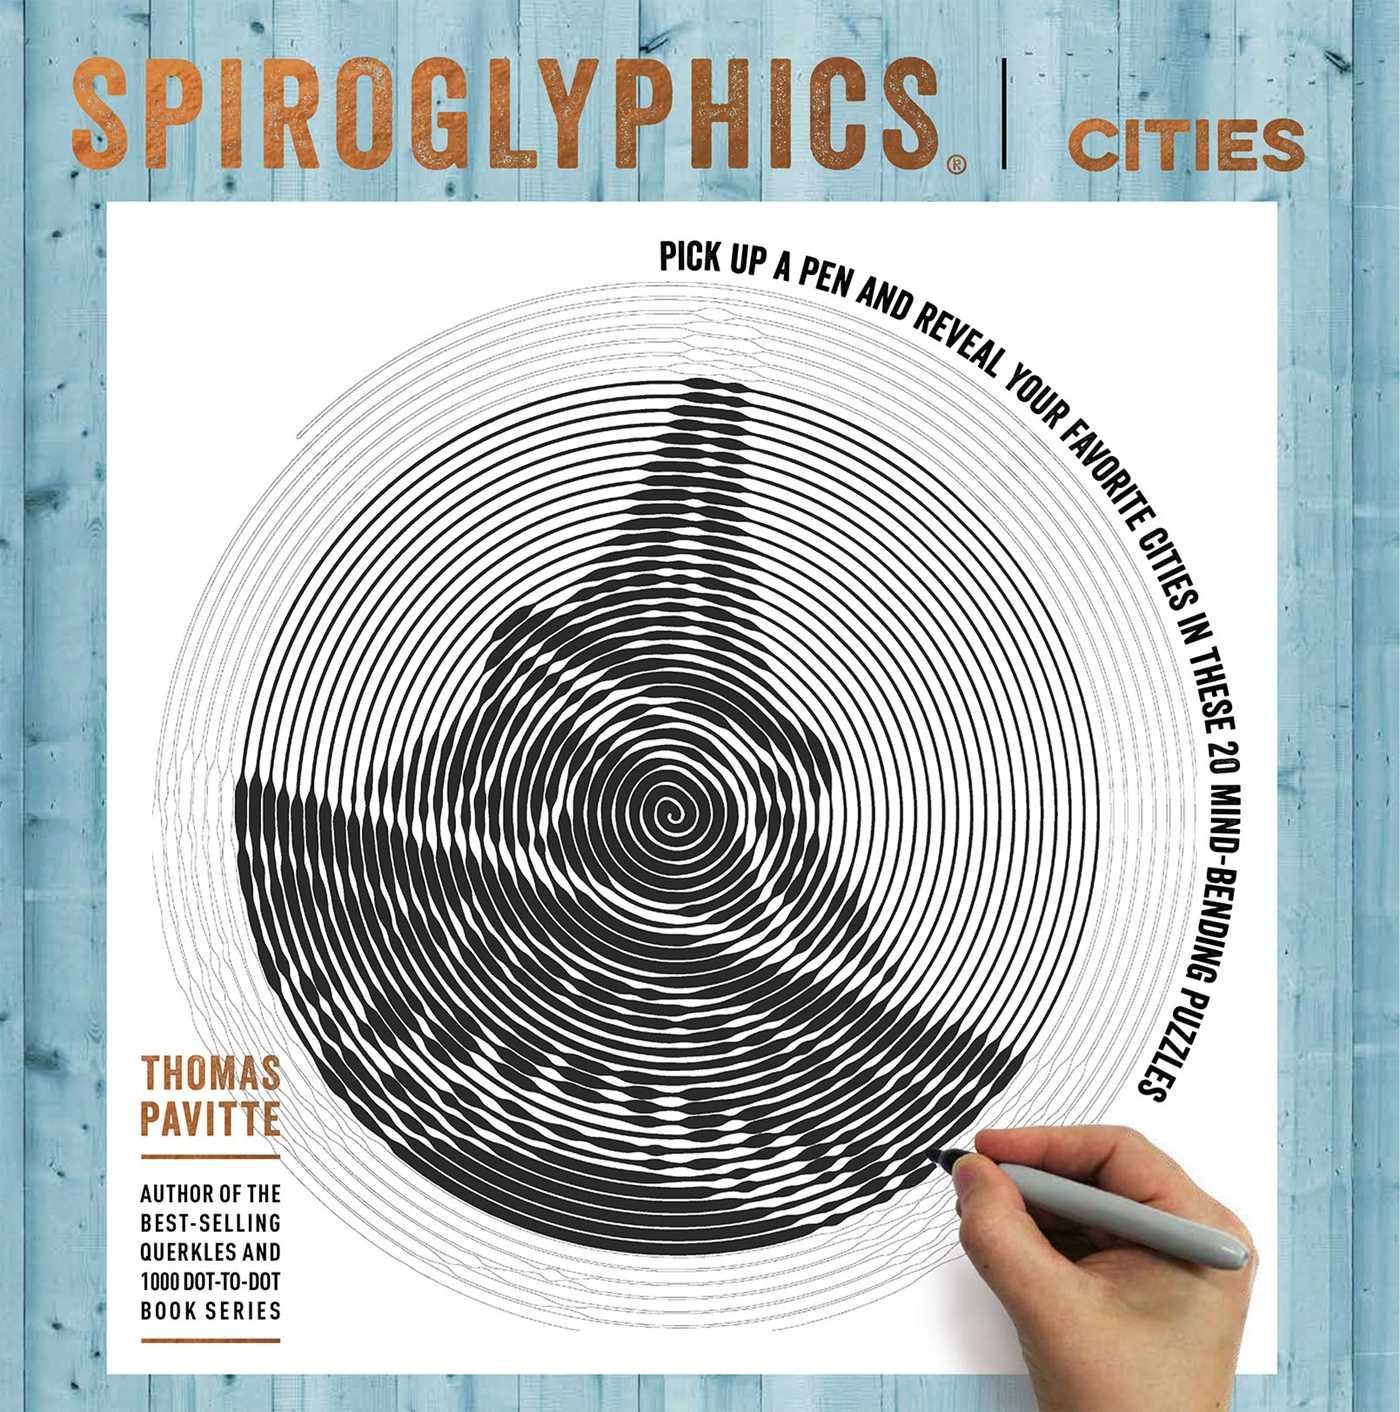 Spiroglyphics: Cities